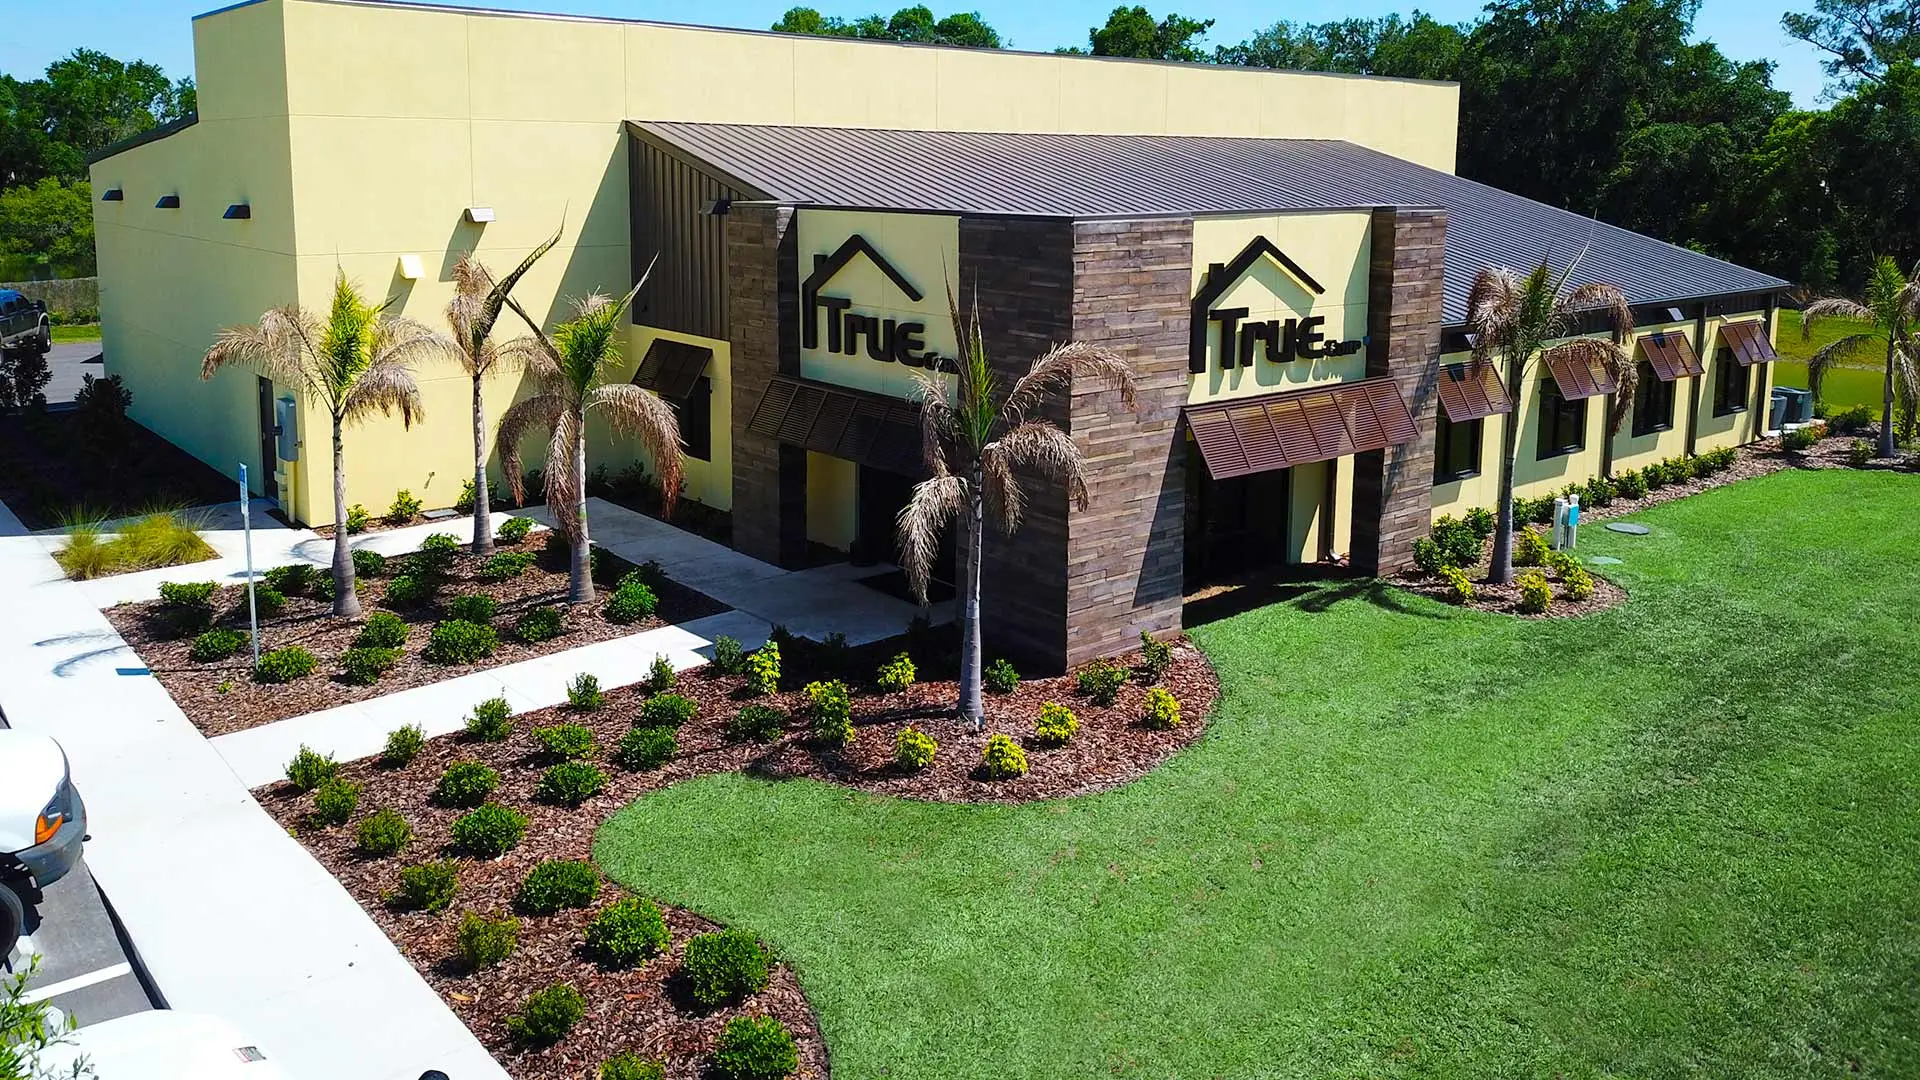 True Builders headquarters in Plant City, FL.